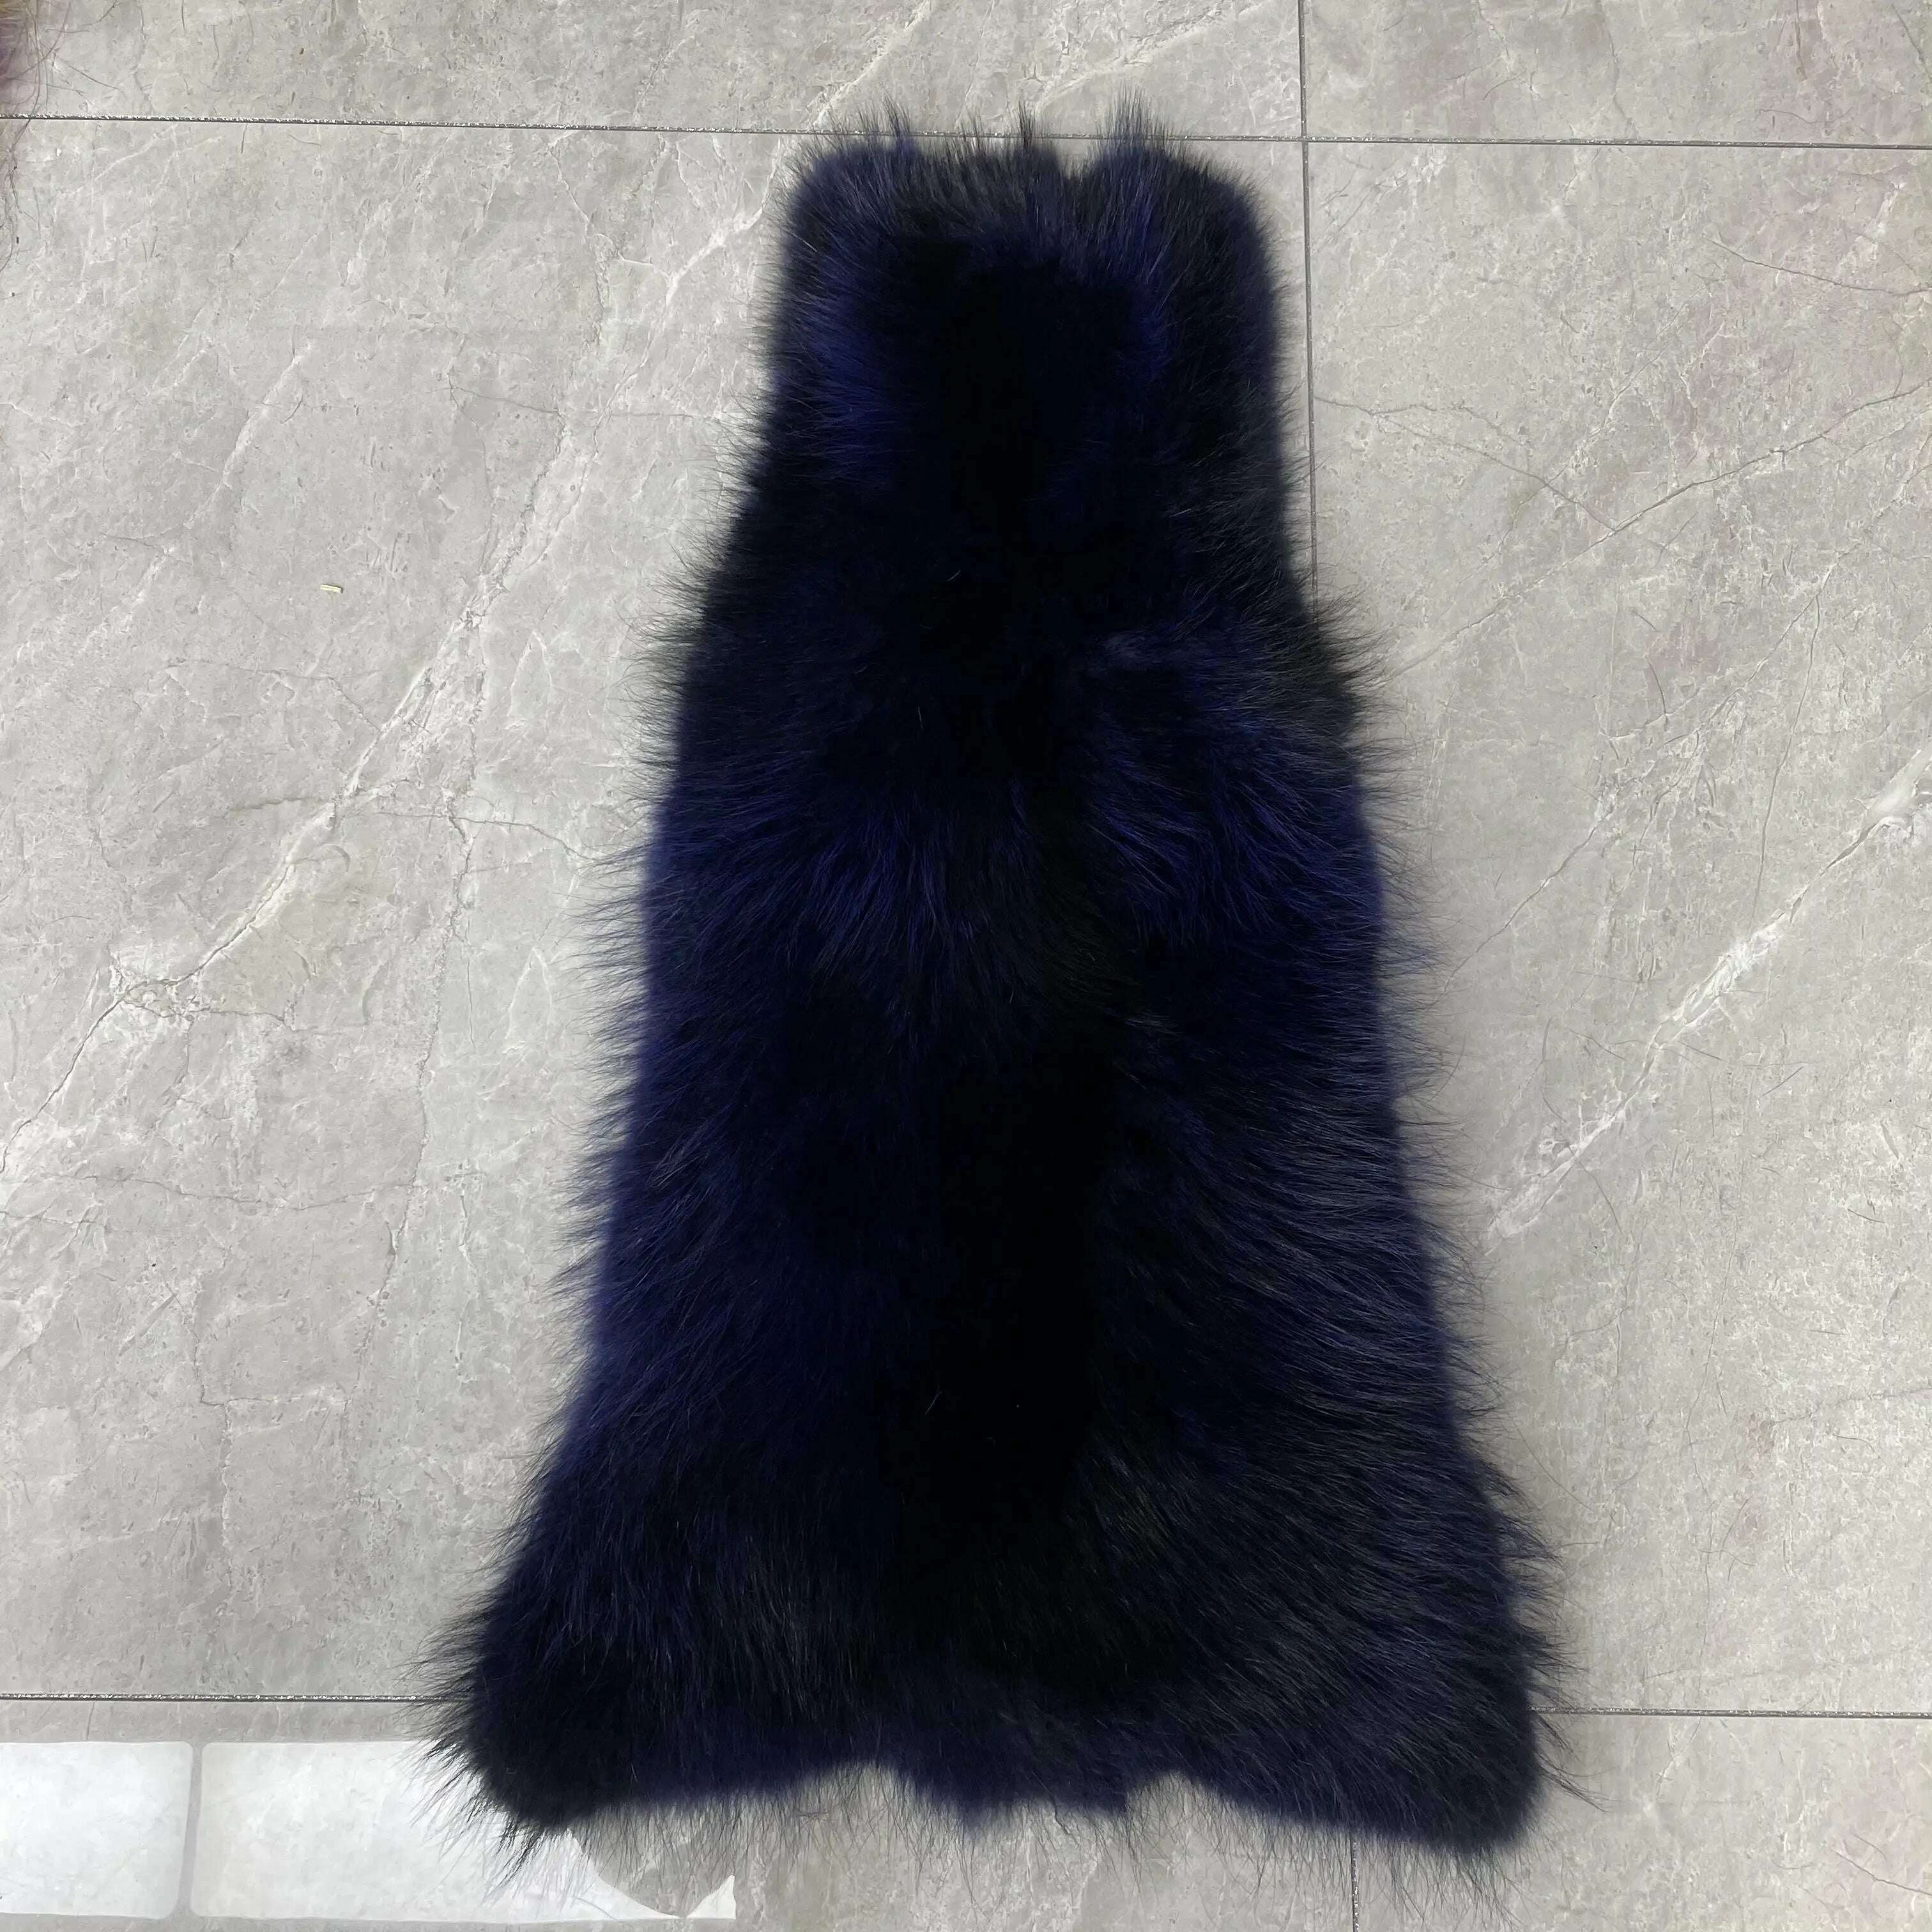 KIMLUD, Real Raccoon Fur Jacket Men Fashion Coat Winter Warm Long Style, Navy / XS(88cm), KIMLUD Women's Clothes